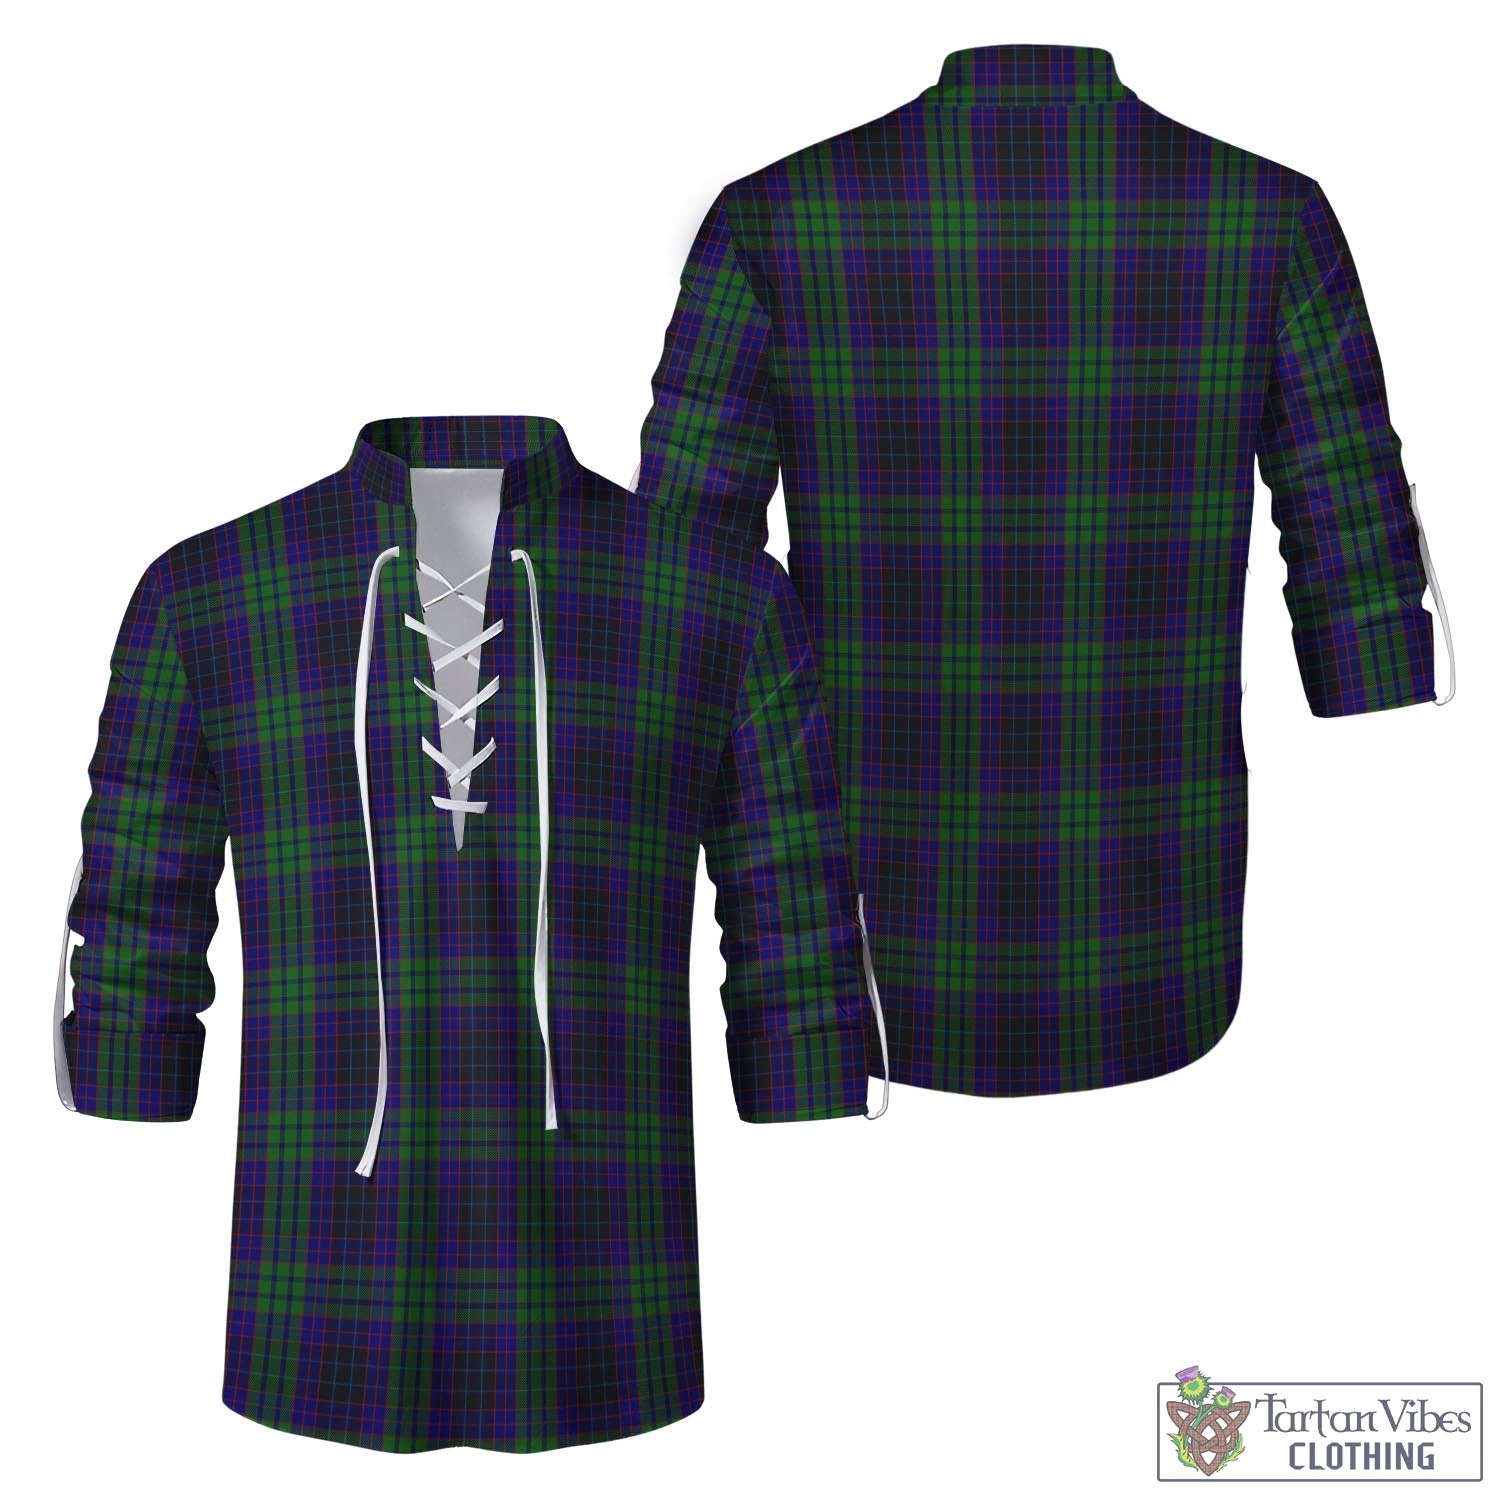 Tartan Vibes Clothing Lumsden Green Tartan Men's Scottish Traditional Jacobite Ghillie Kilt Shirt